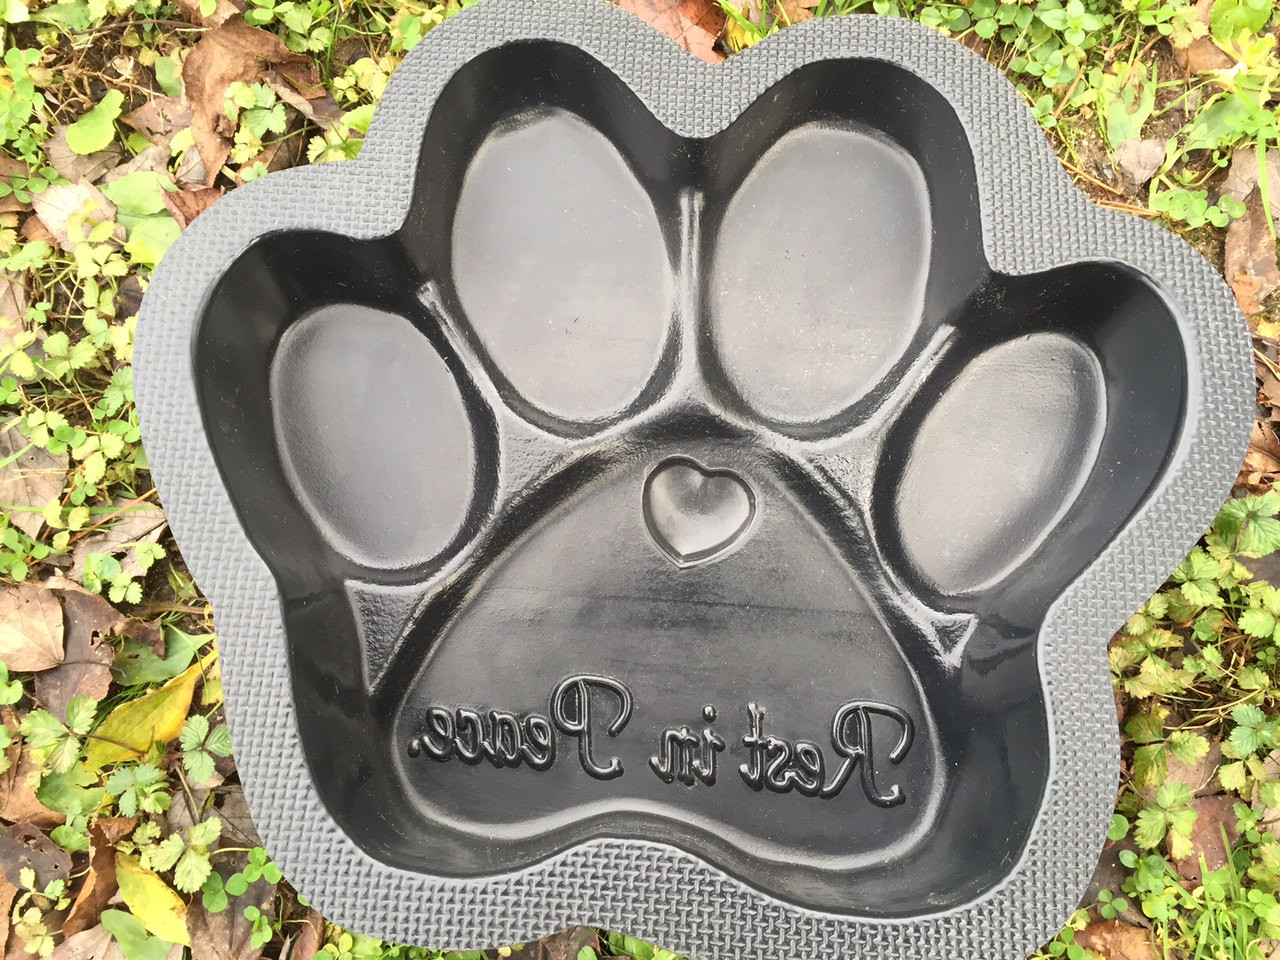 DIY Dog Paw Print Mold
 Concrete Mold to make a Free Standing Paw print memorial